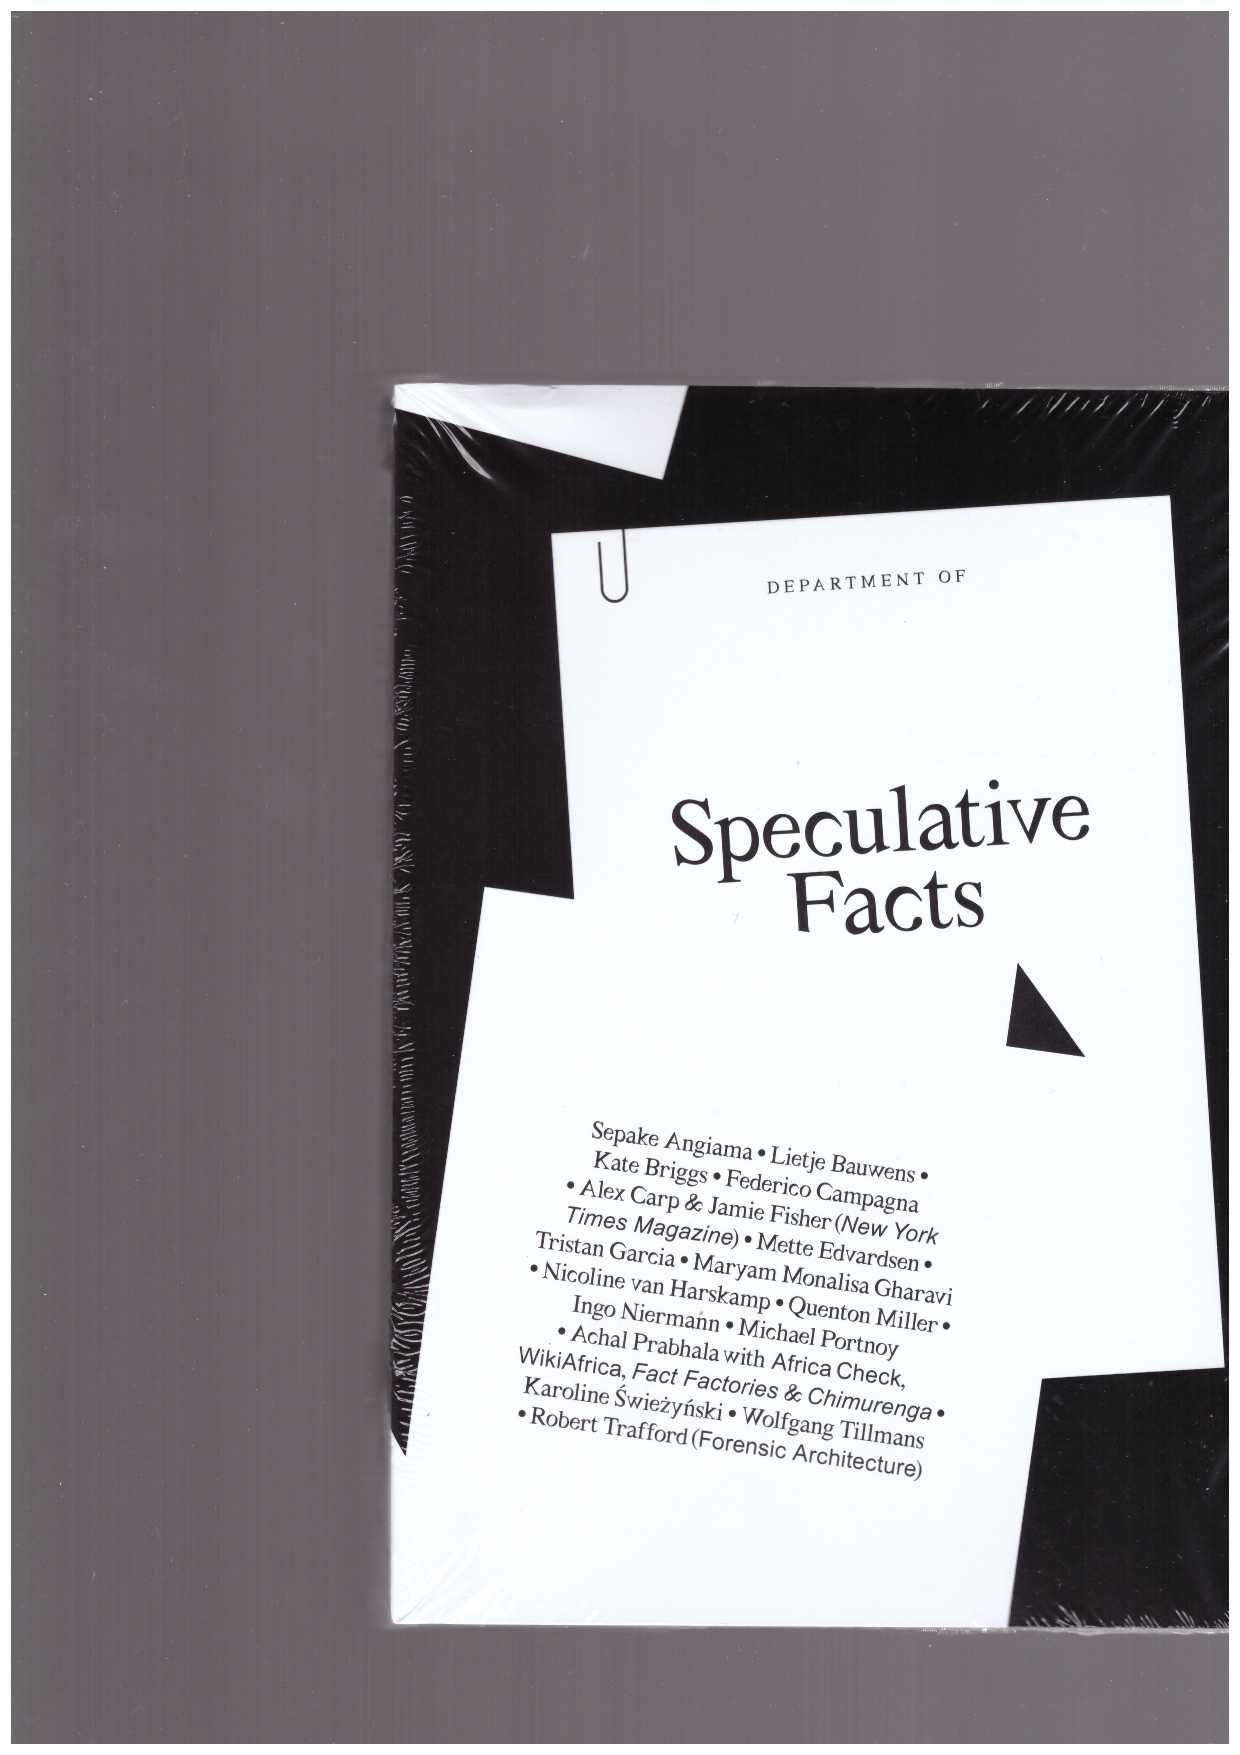 SWIEZYNSKI, Karoline ; BAUWENS, Lietje ; MILLER, Quenton (eds.) - Department of Speculative Facts